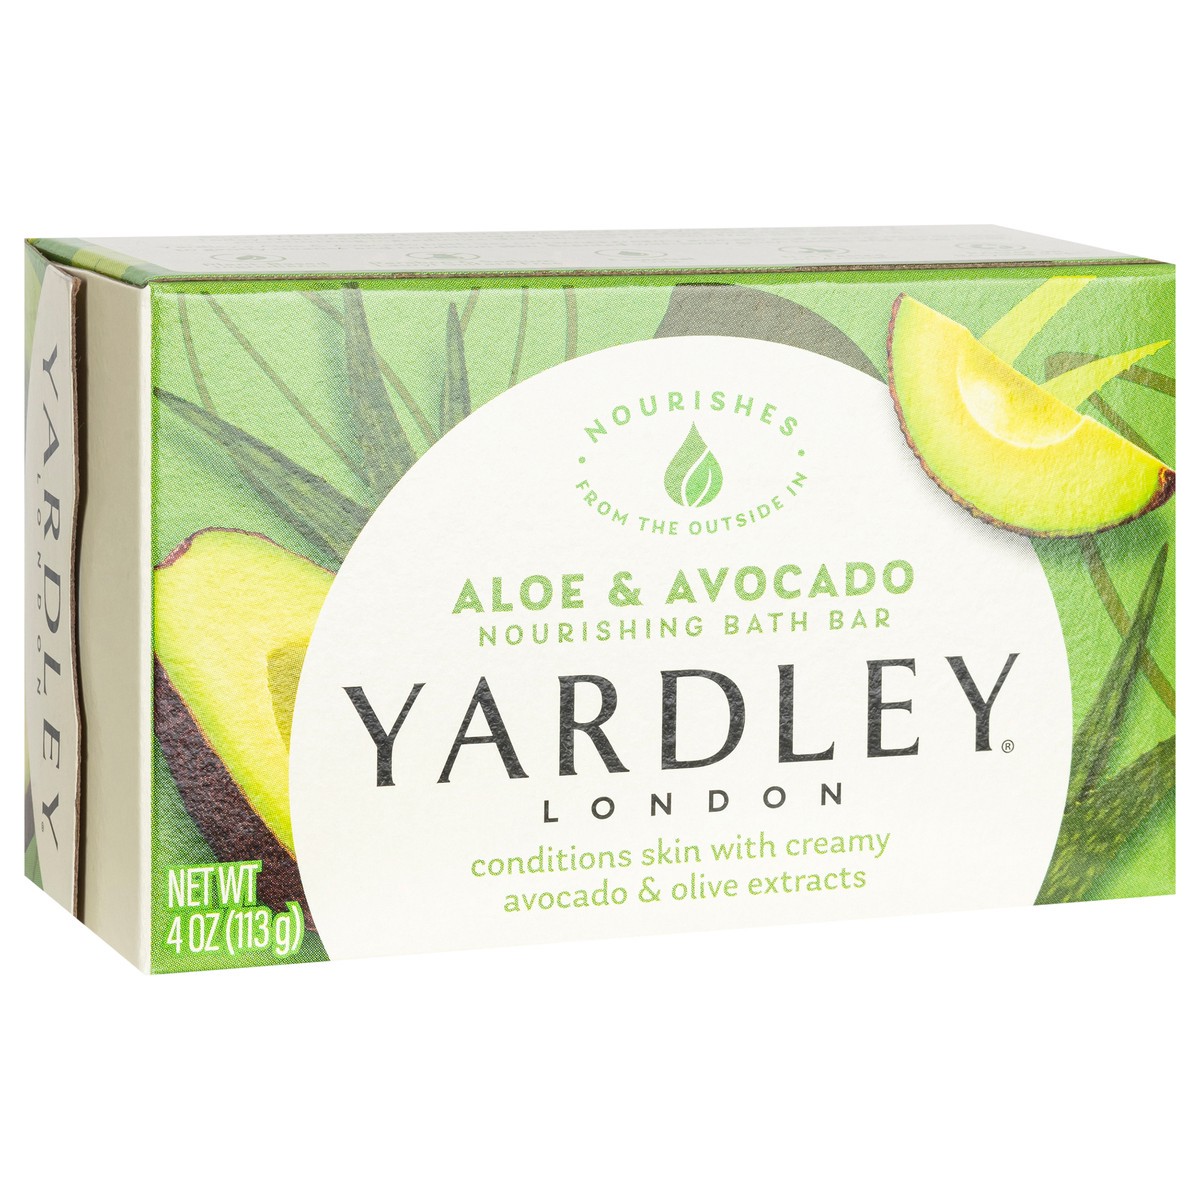 slide 11 of 12, Yardley London Nourishing Bath Soap Bar Aloe & Avocado, Conditions Skin with Creamy Avocado & Olive Extracts, 4.0 oz Bath Bar, 1 Soap Bar, 4.25 oz